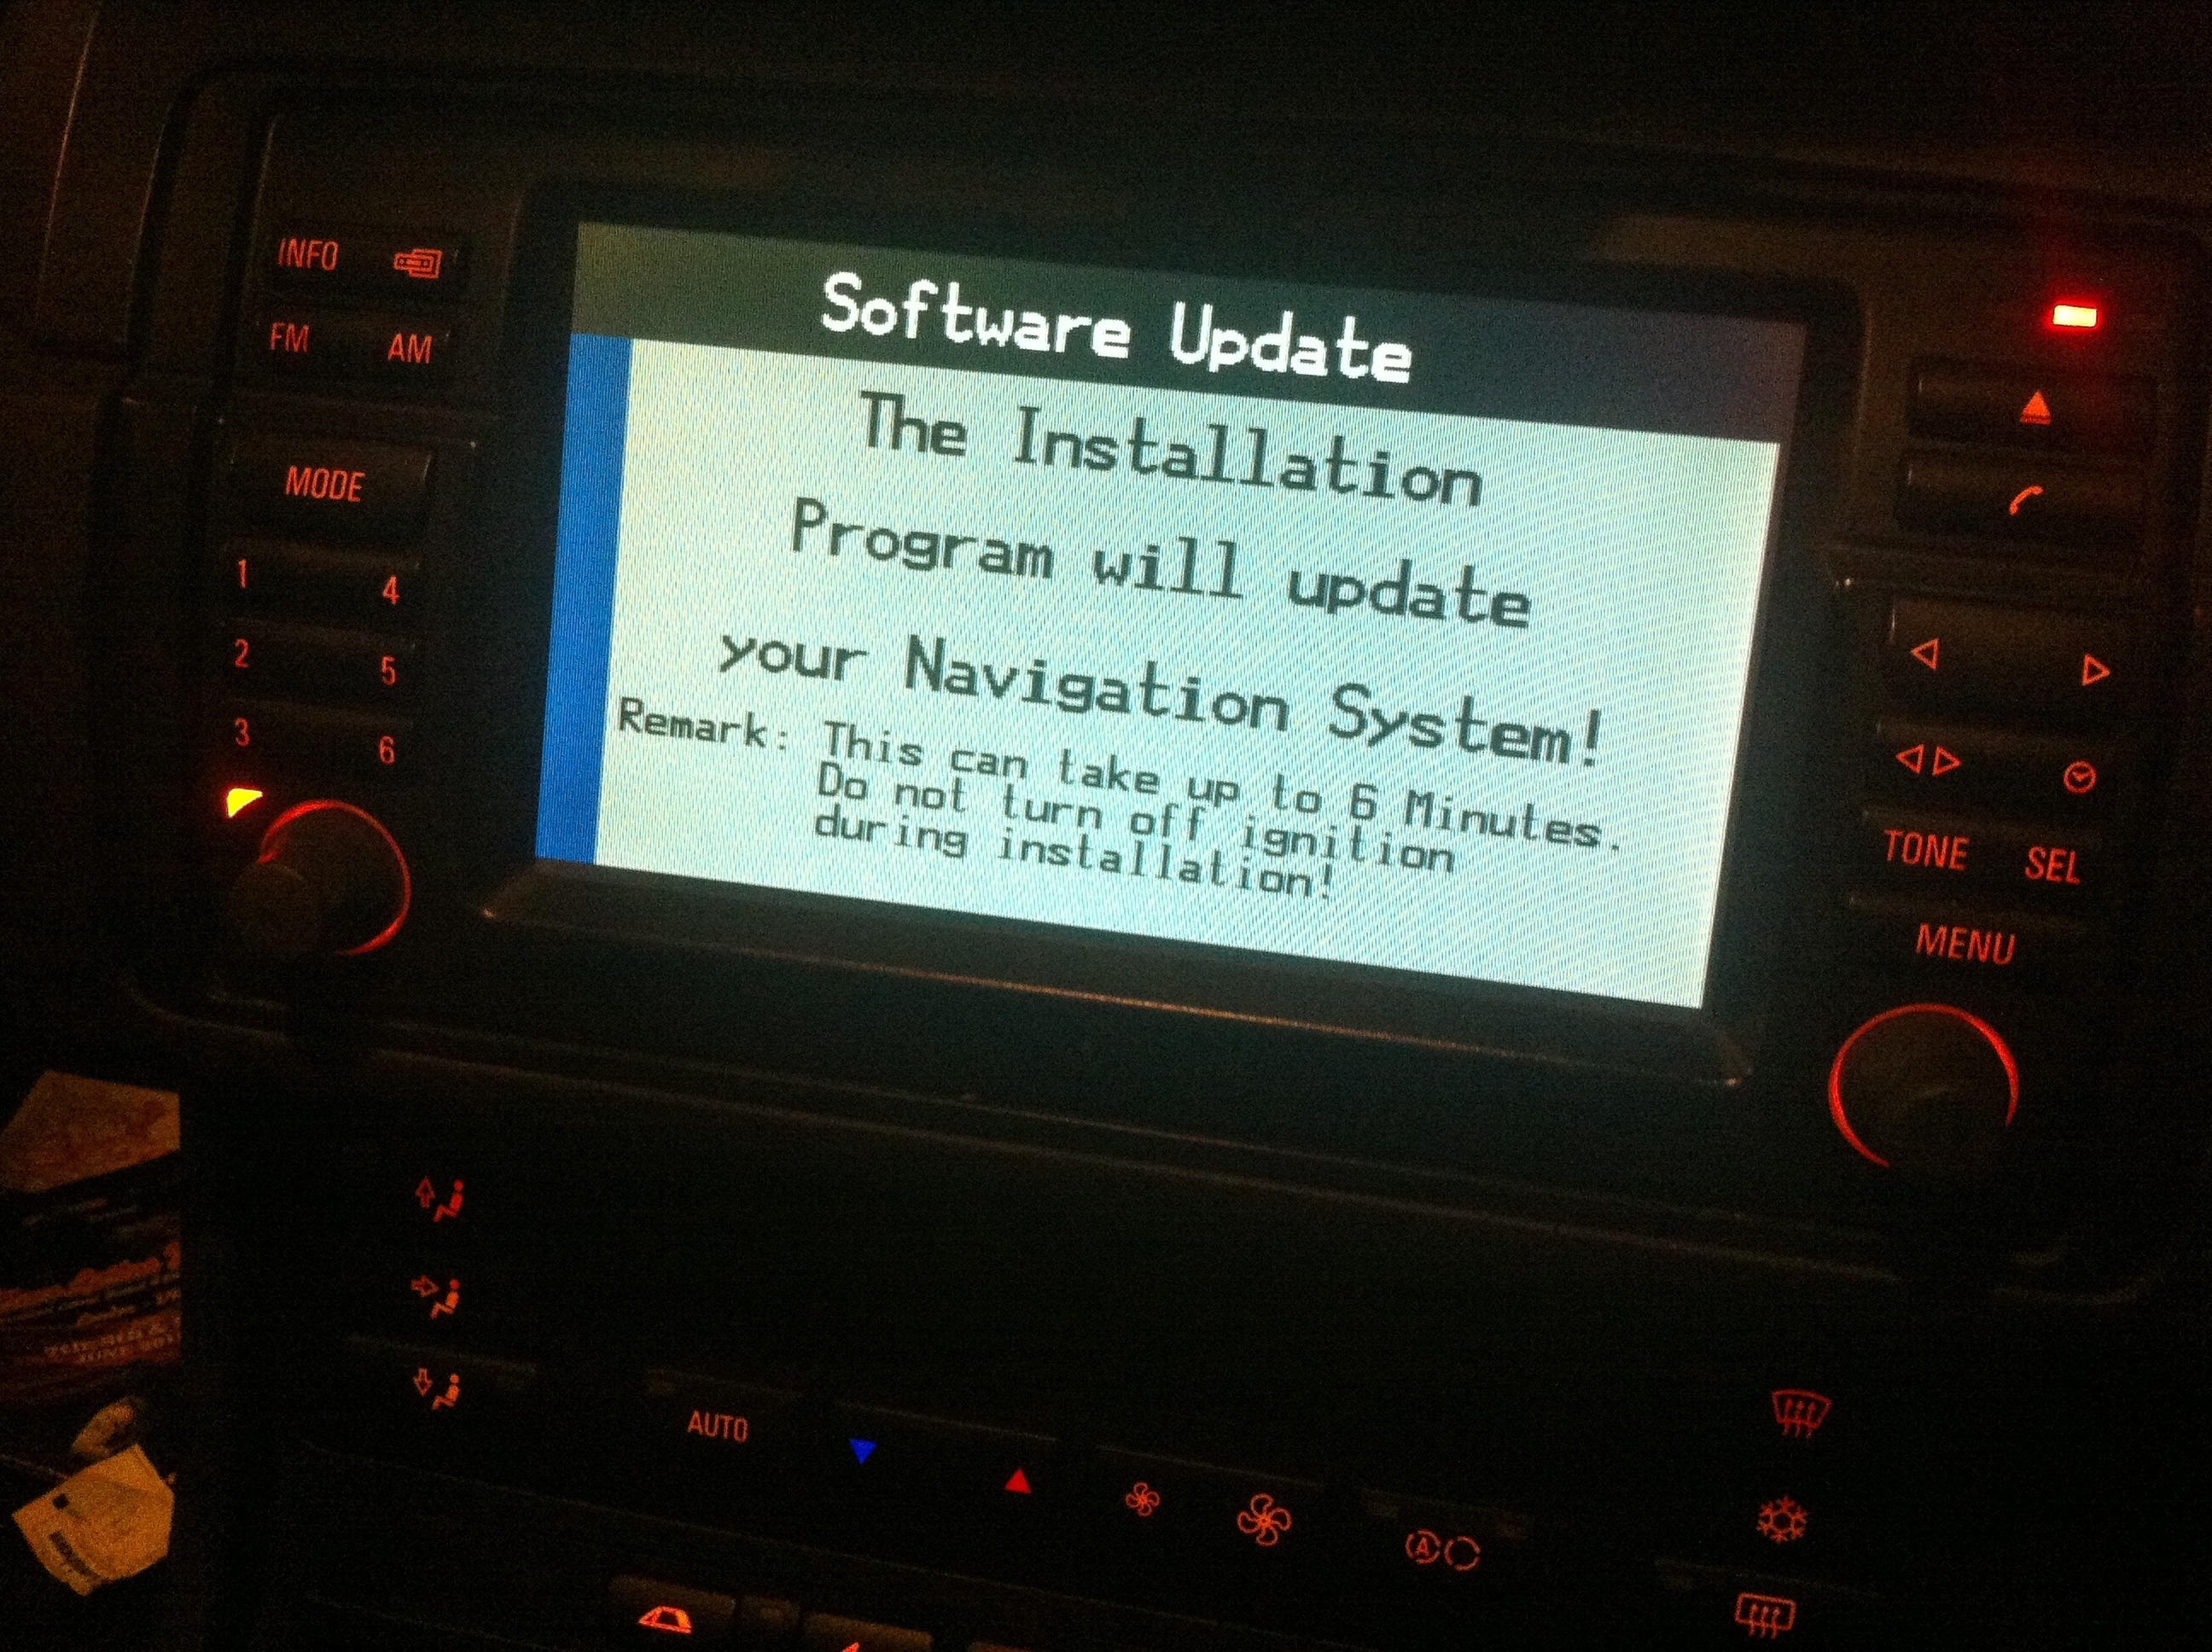 Bmw navigation software update download